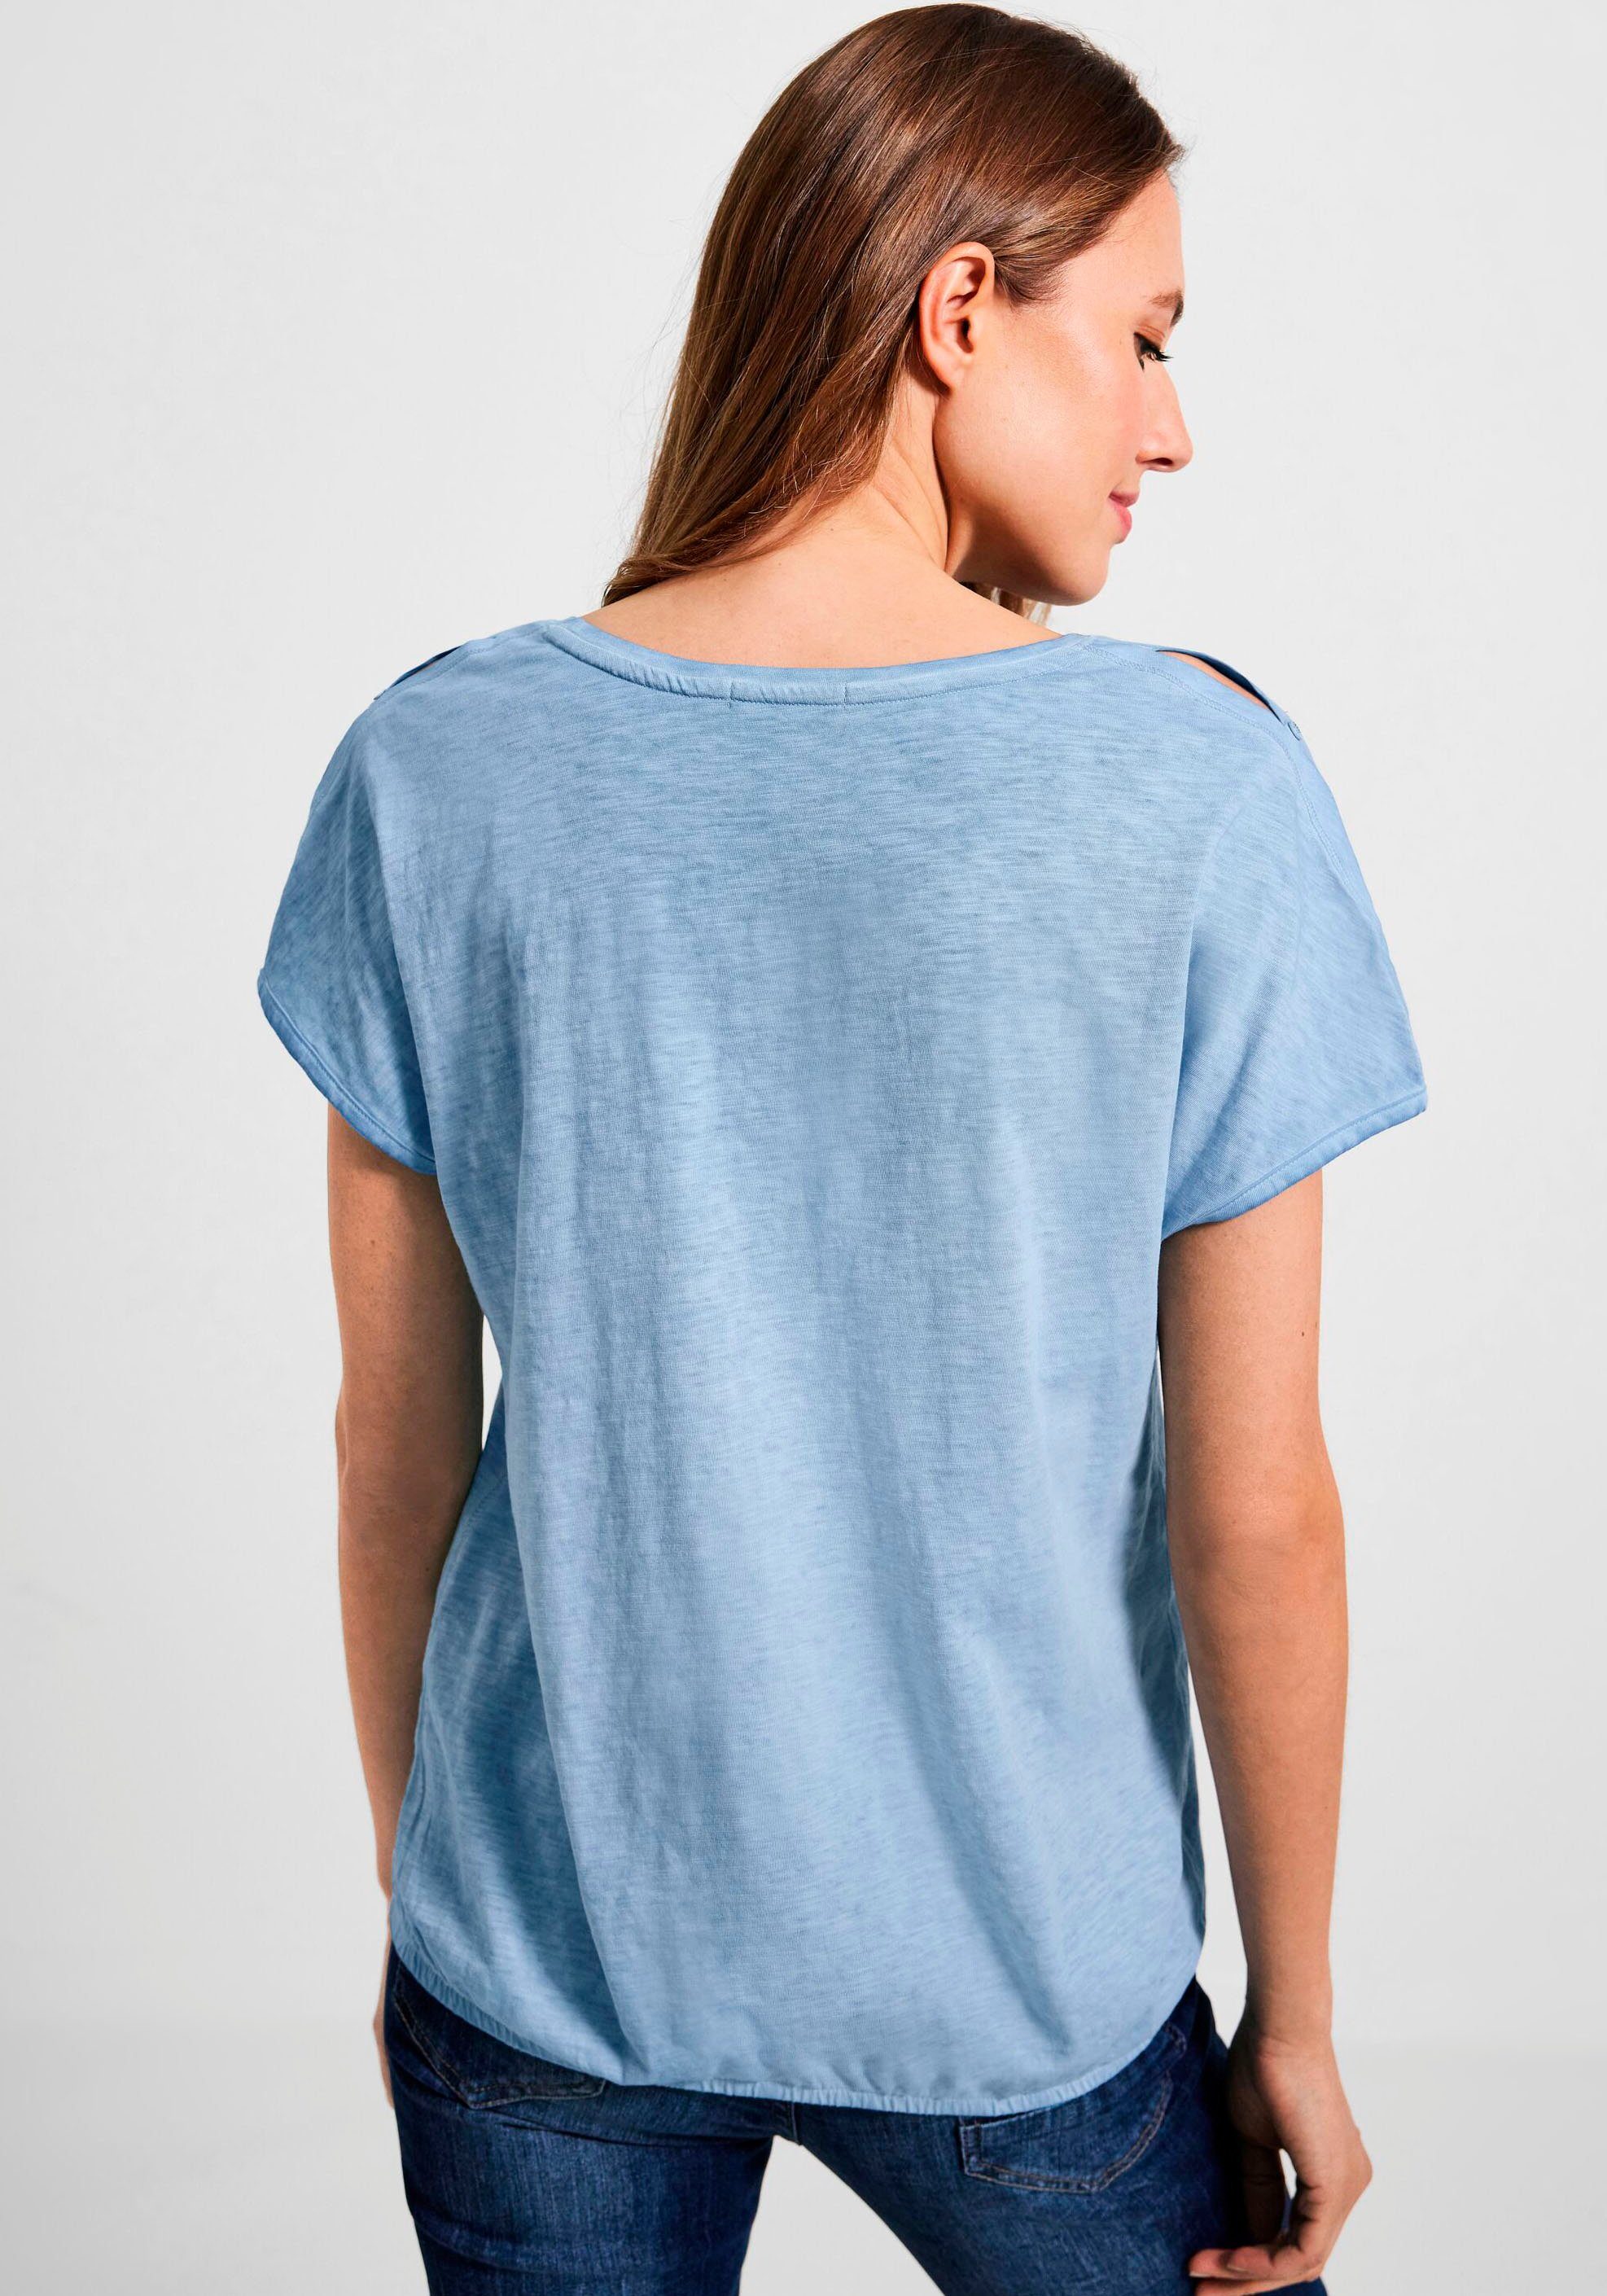 Schultern Cut-Outs den Cecil an T-Shirt mit himmelblau